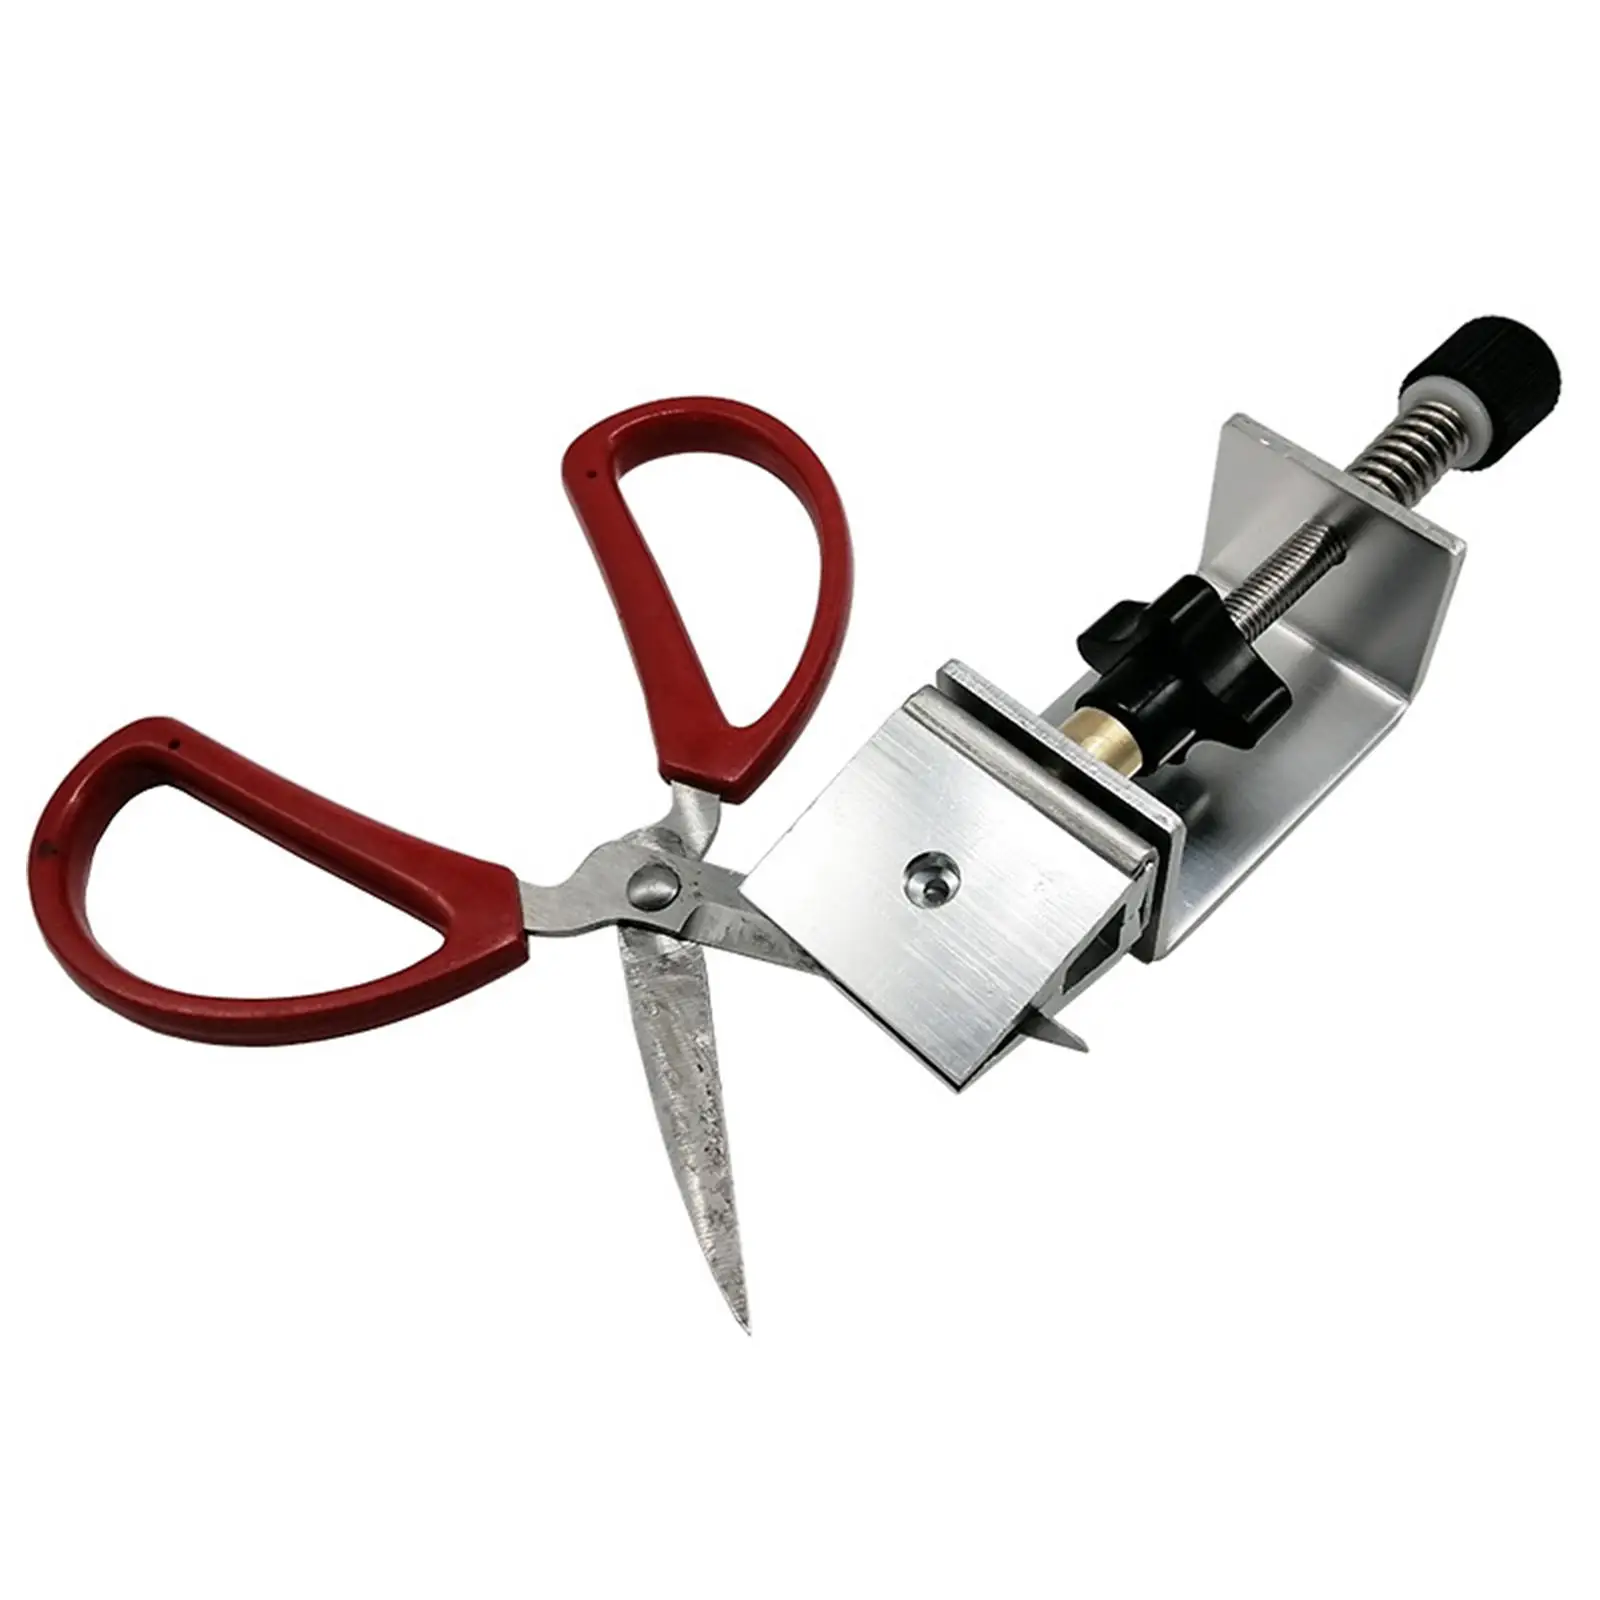 Knife Sharpener Flip Adjustable Portable Knife Clip for Household Grinding Chef Knife Sharpening Knife Fixed Angle Sharpener